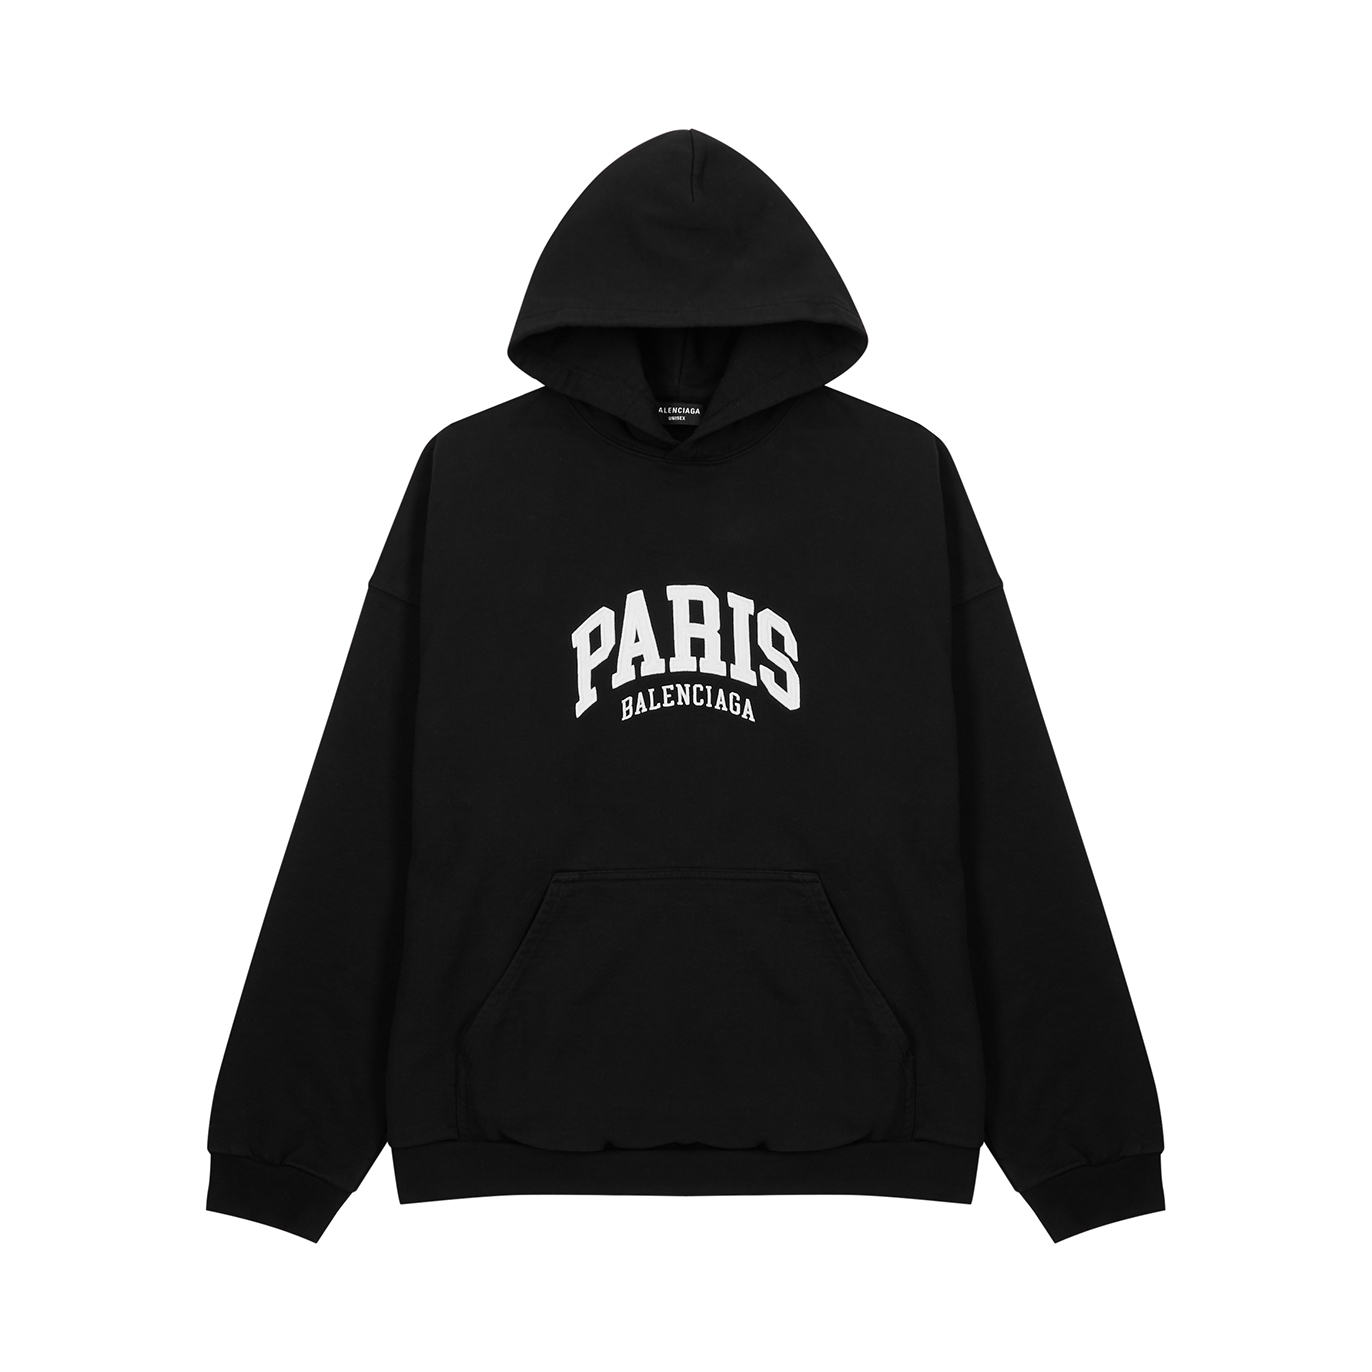 Balenciaga Cities Paris Black Hooded Cotton Sweatshirt - Black And White - 1